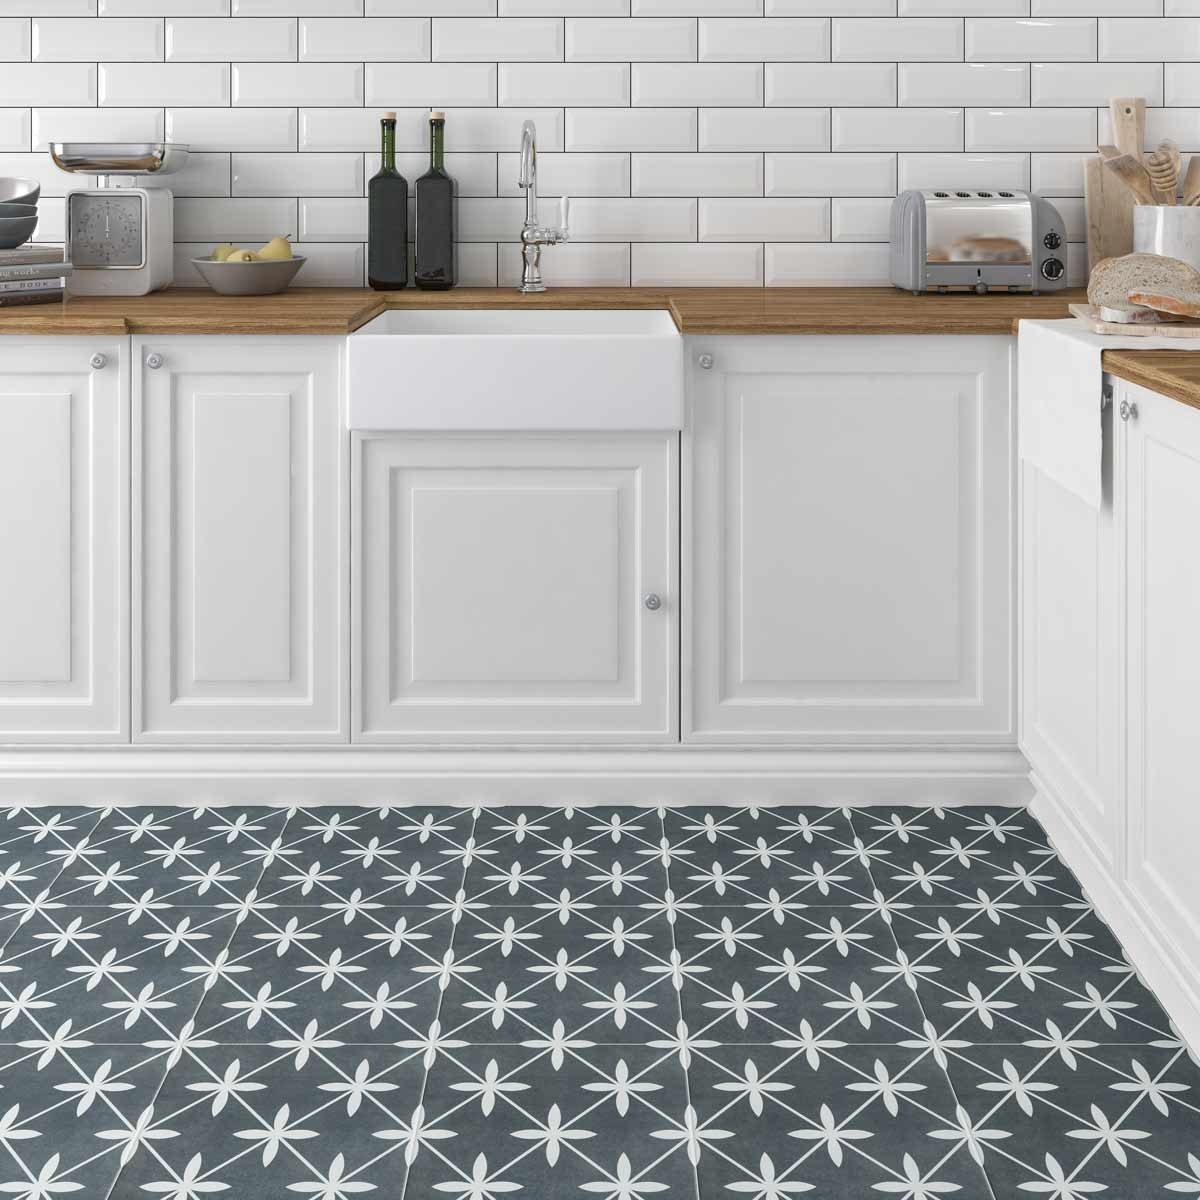 Laura Ashley Wicker Charcoal Floor Tile 33x33cm - Luxury Tiles